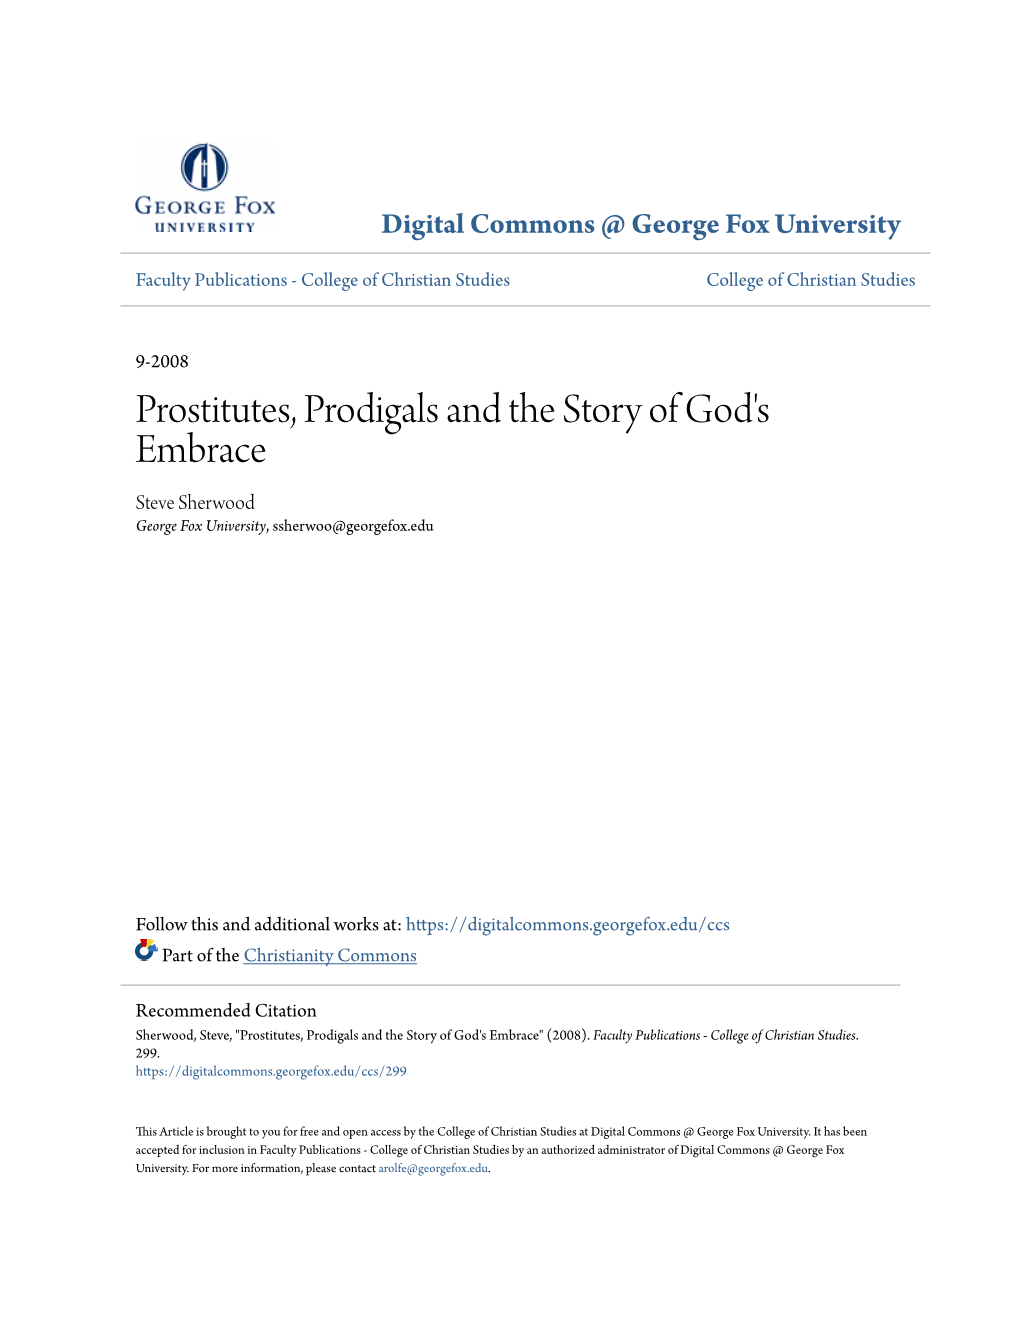 Prostitutes, Prodigals and the Story of God's Embrace Steve Sherwood George Fox University, Ssherwoo@Georgefox.Edu